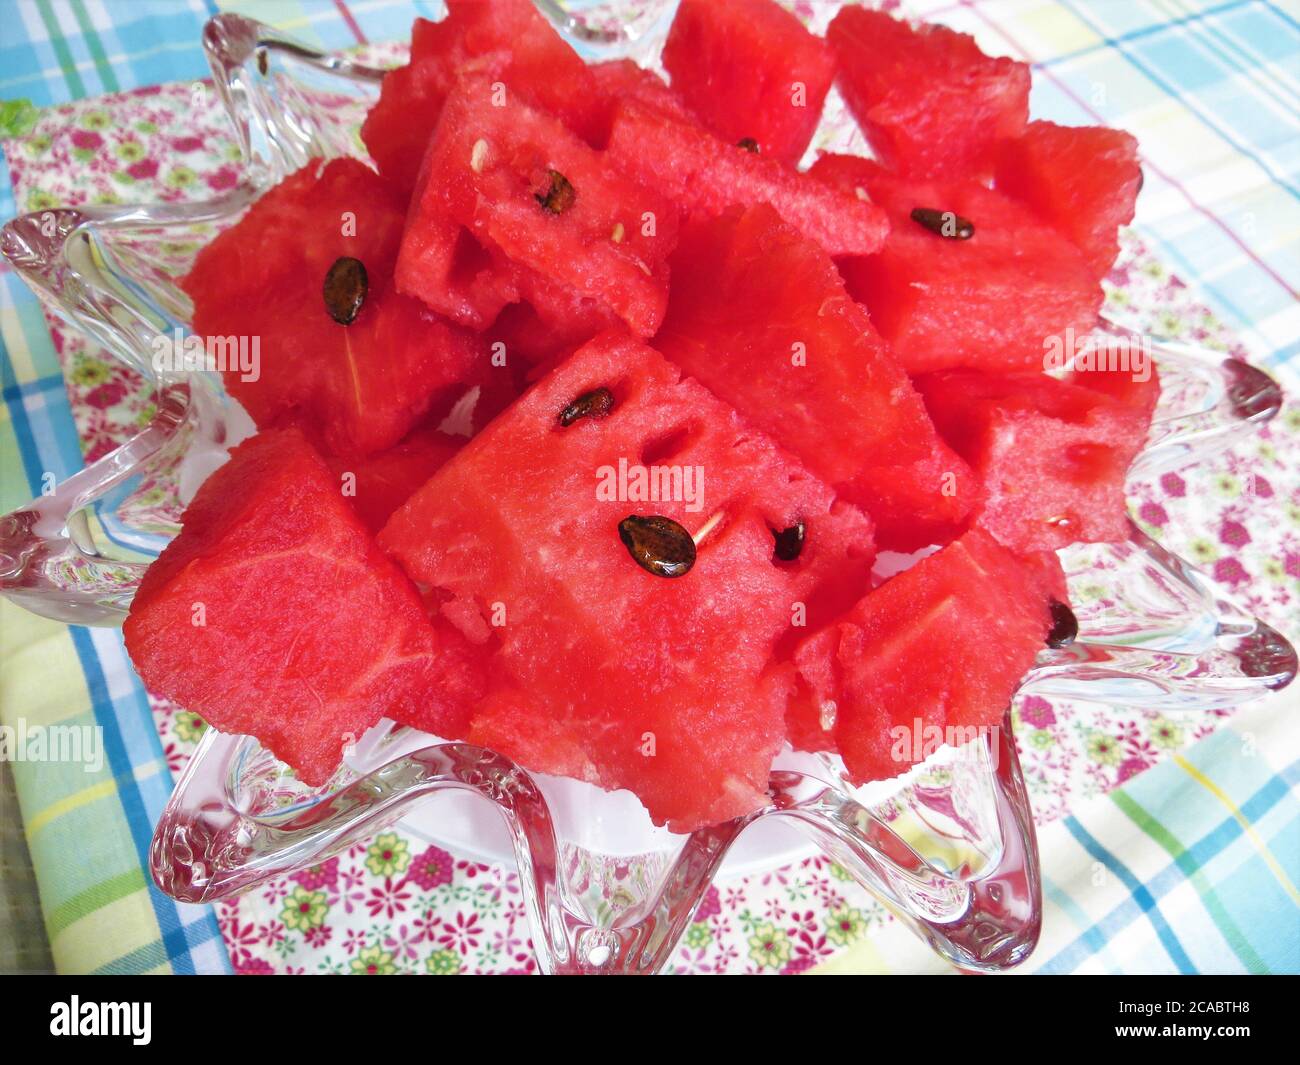 Chuncks of fresh, ripe watermelon Stock Photo